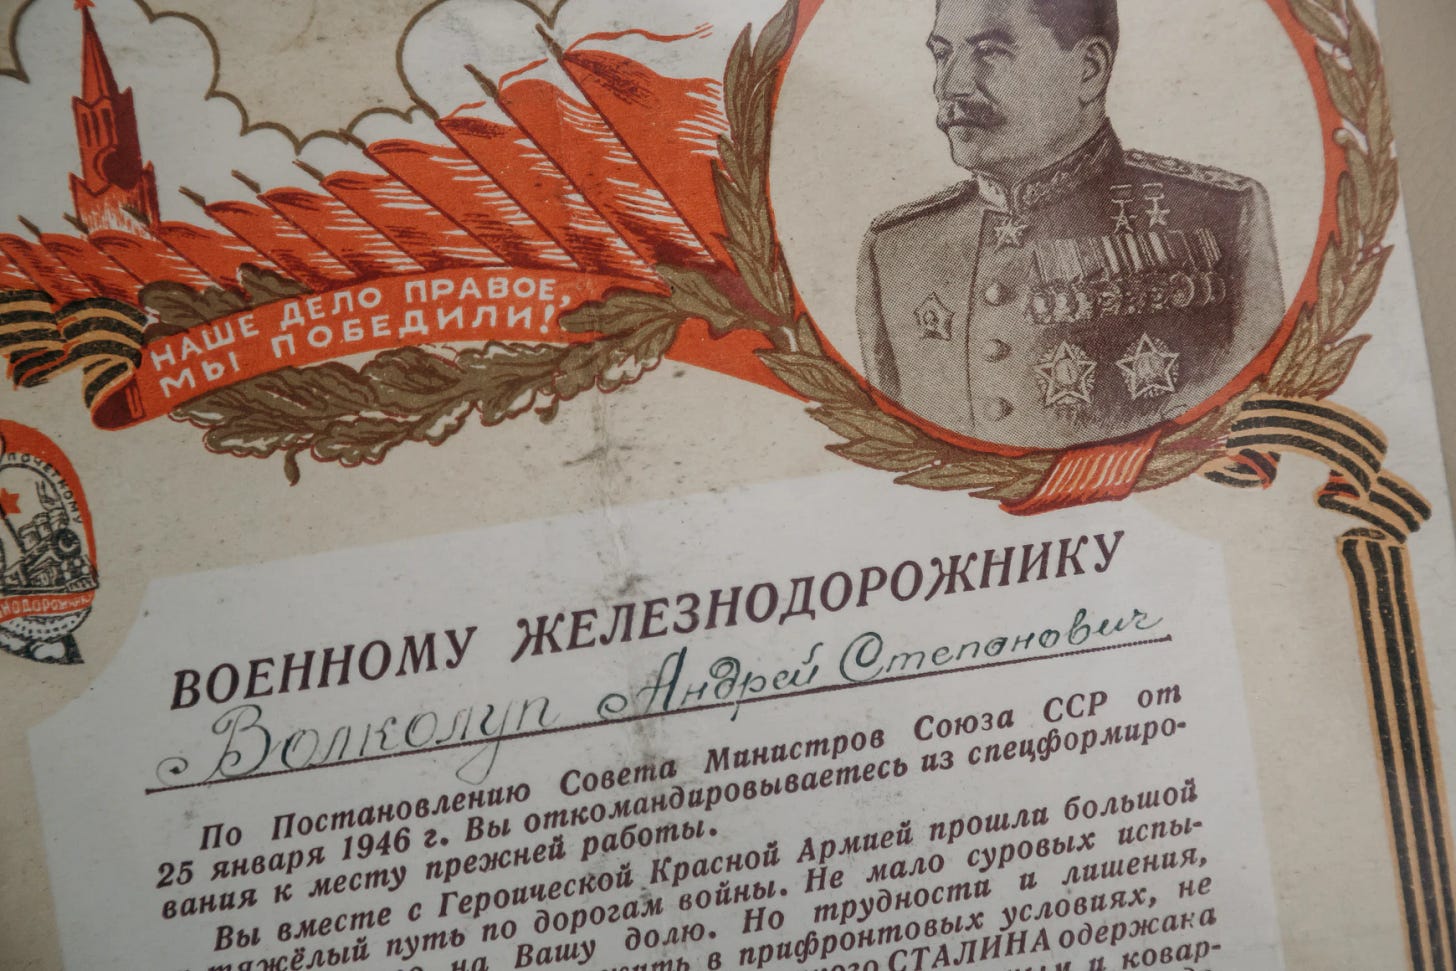 Soviet Fear of Joseph Stalin